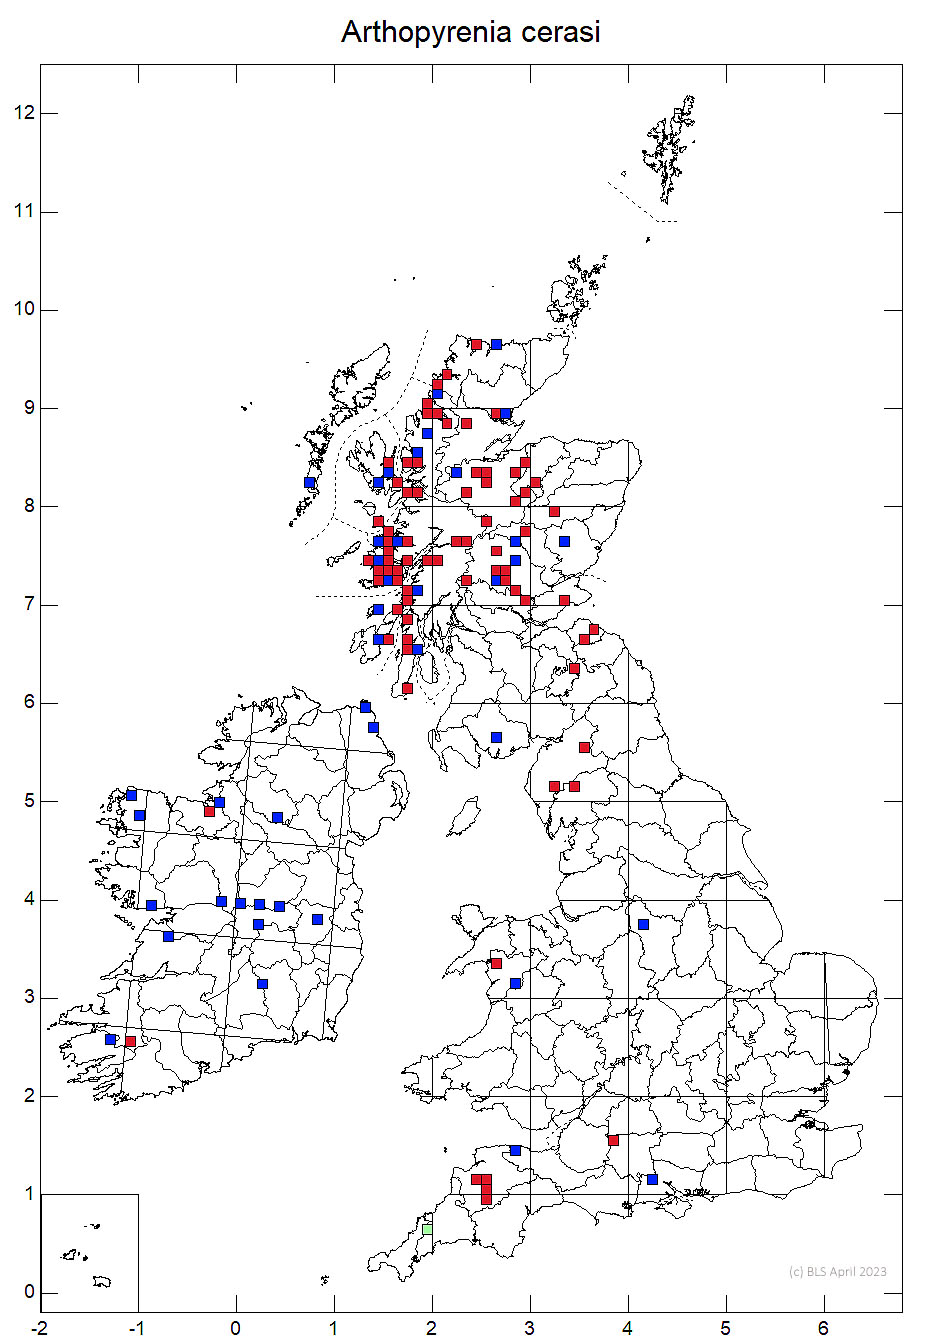 Arthopyrenia cerasi 10km sq distribution map